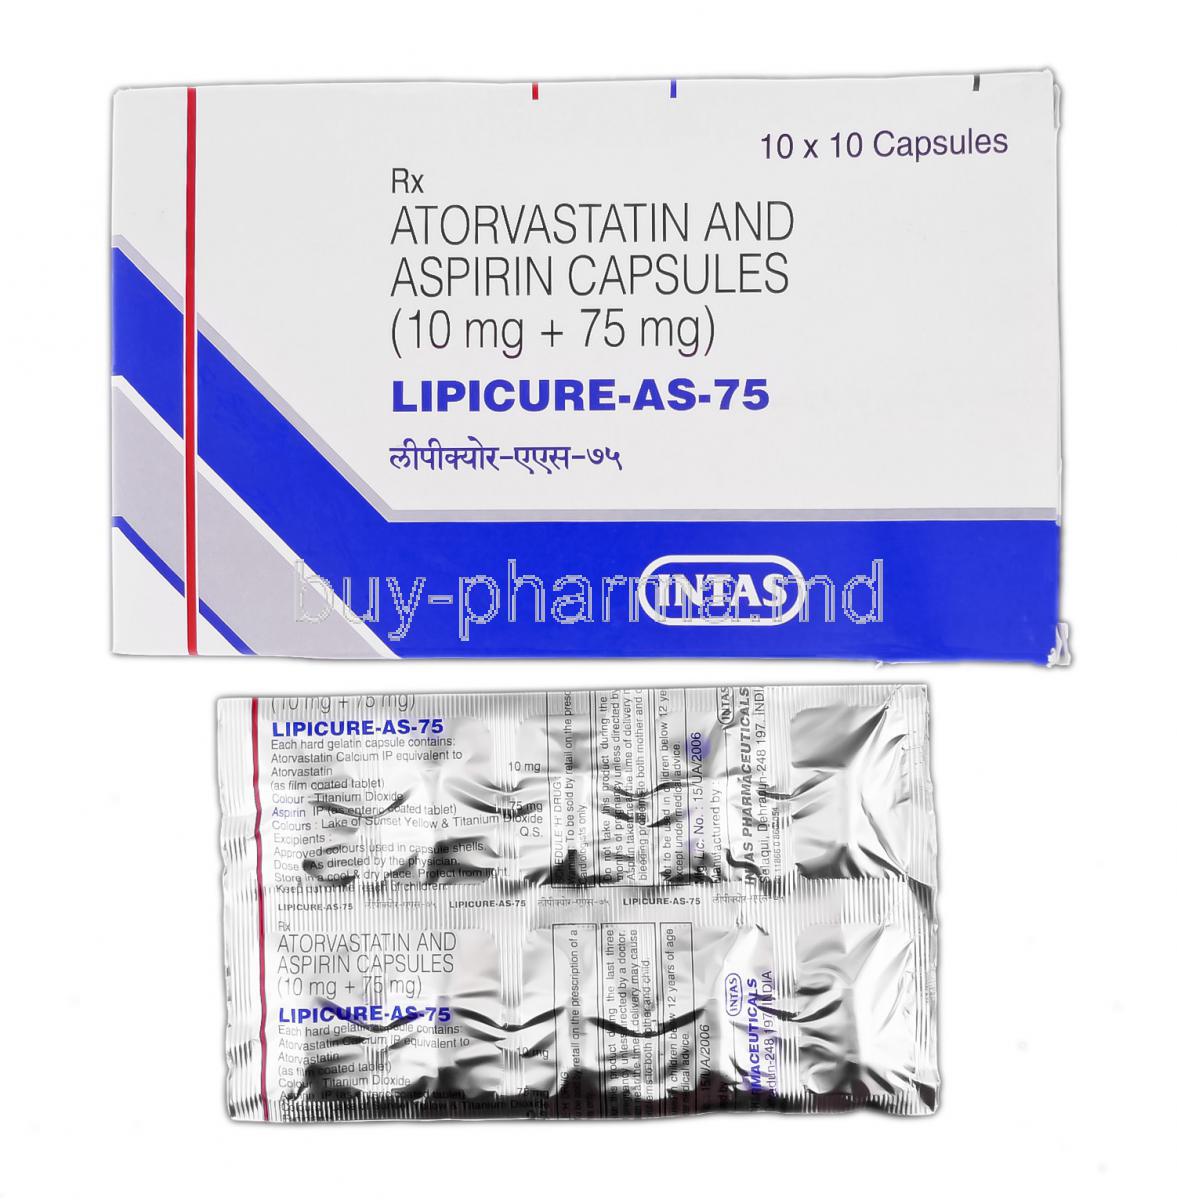 Lipicure-AS-75, Generic Lipitor ASP, Atorvastatin and Aspirin, 10 mg and 75 mg, Box and Strip